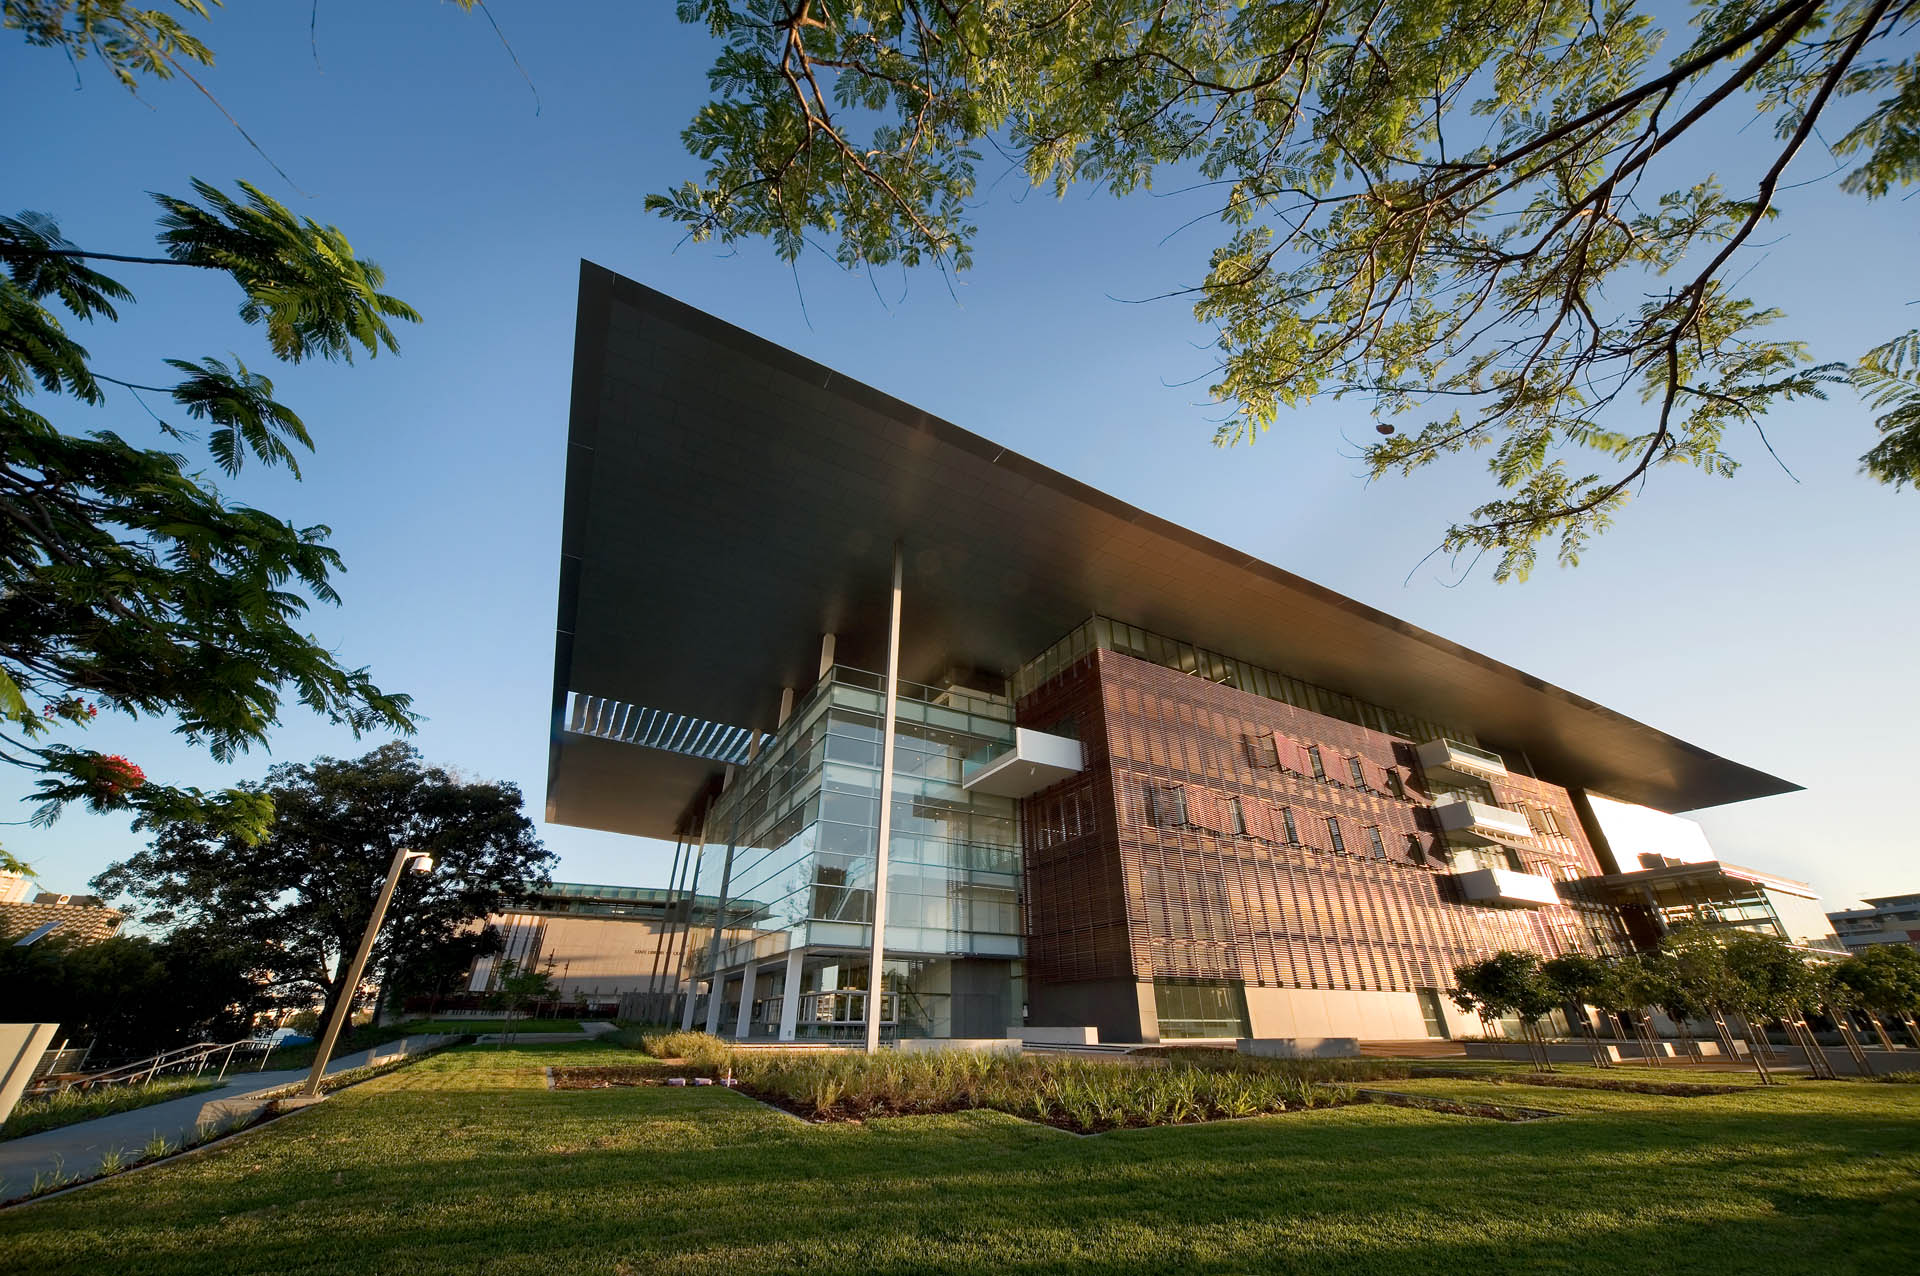 Queensland Gallery of Modern Art